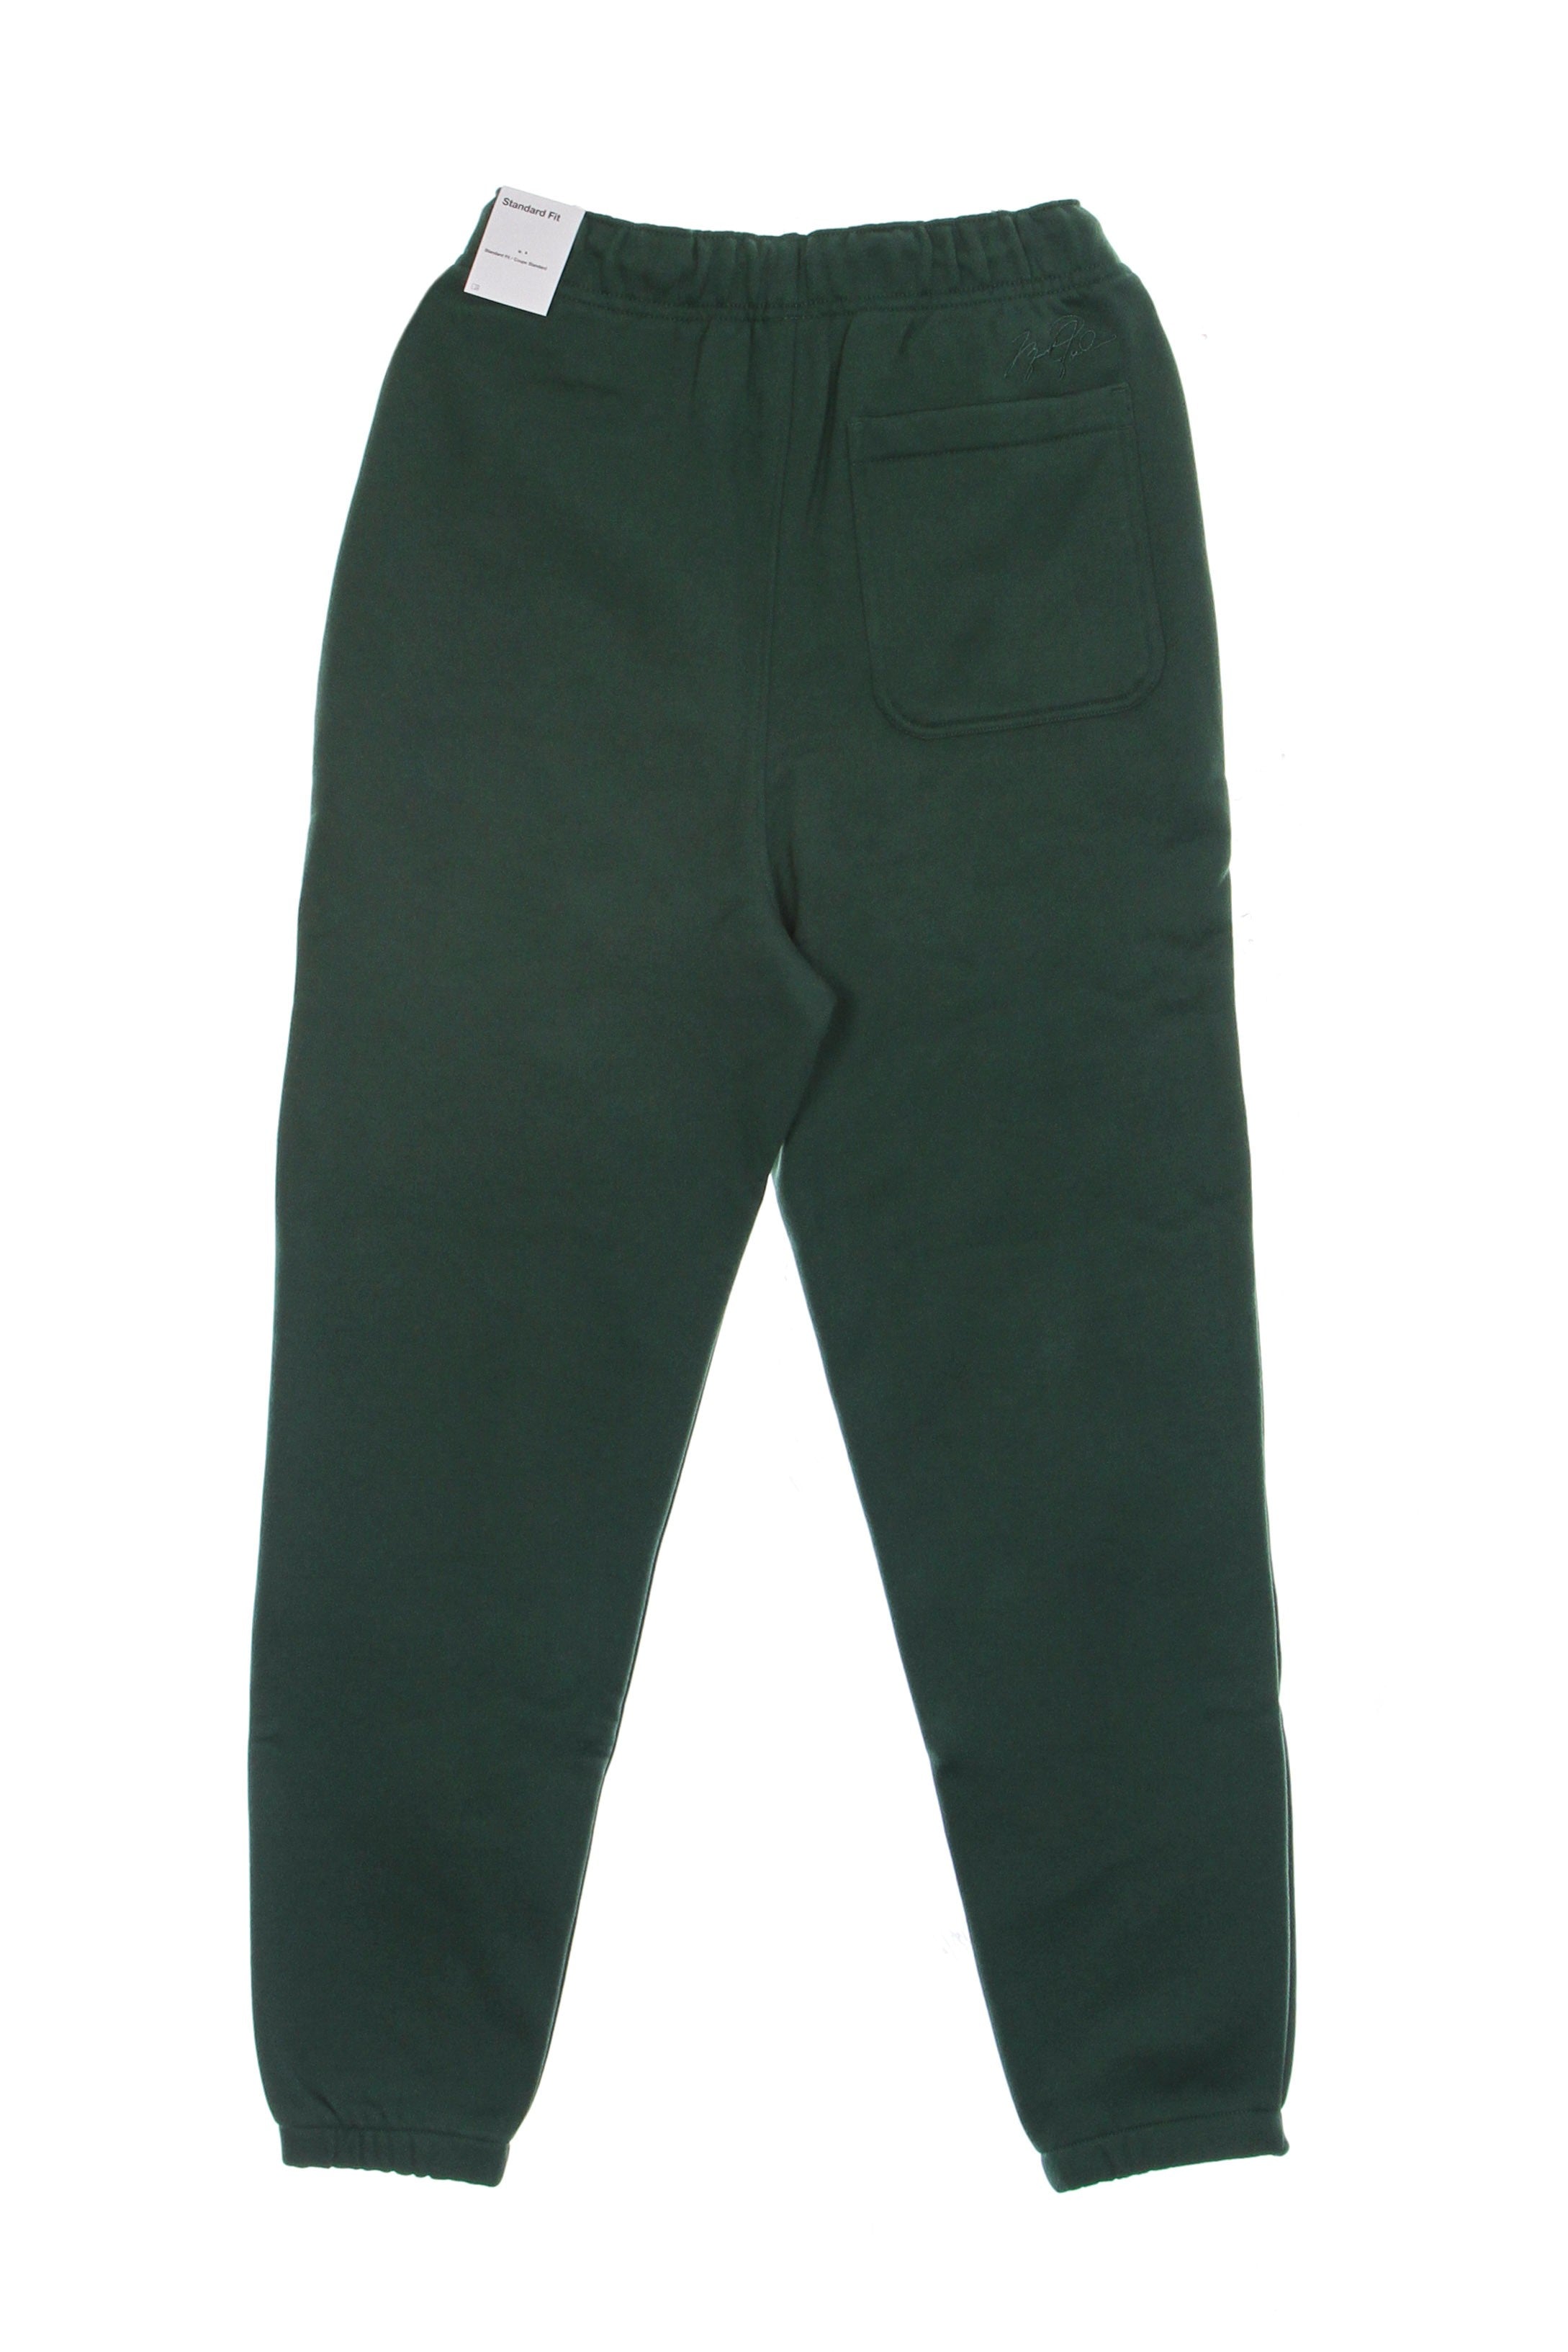 Jordan, Pantalone Tuta Felpato Uomo Essential Fleece Pant, Noble Green